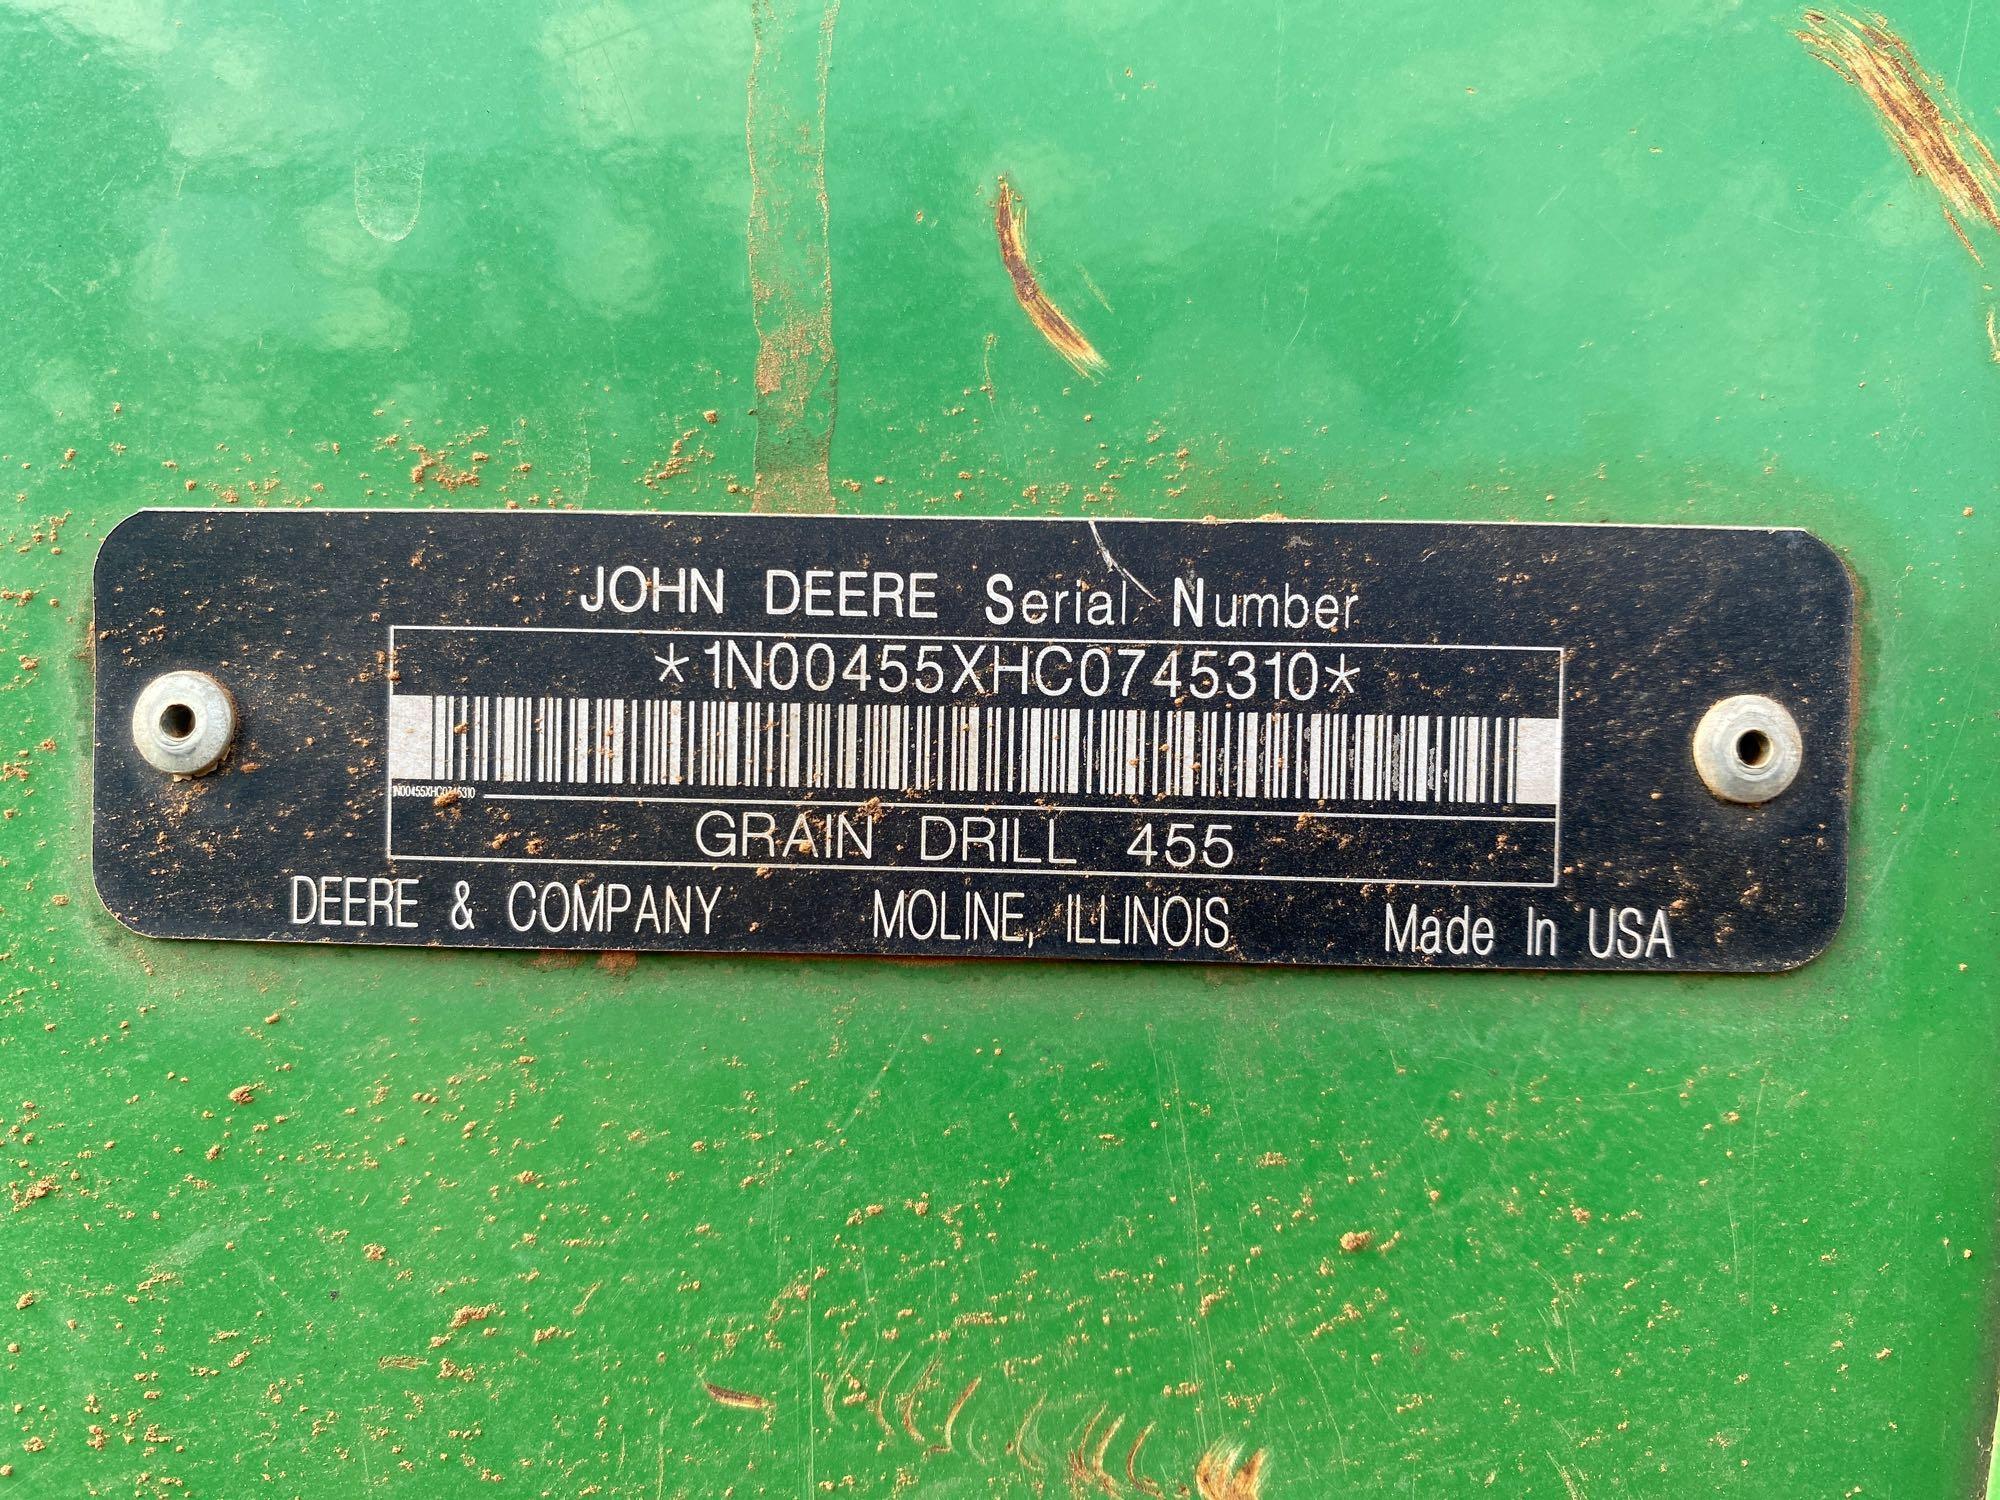 JOHN DEERE 455 GRAIN DRILL, 35', DF 7 1/2" SPACING, FERTILIZER, 13" DISC